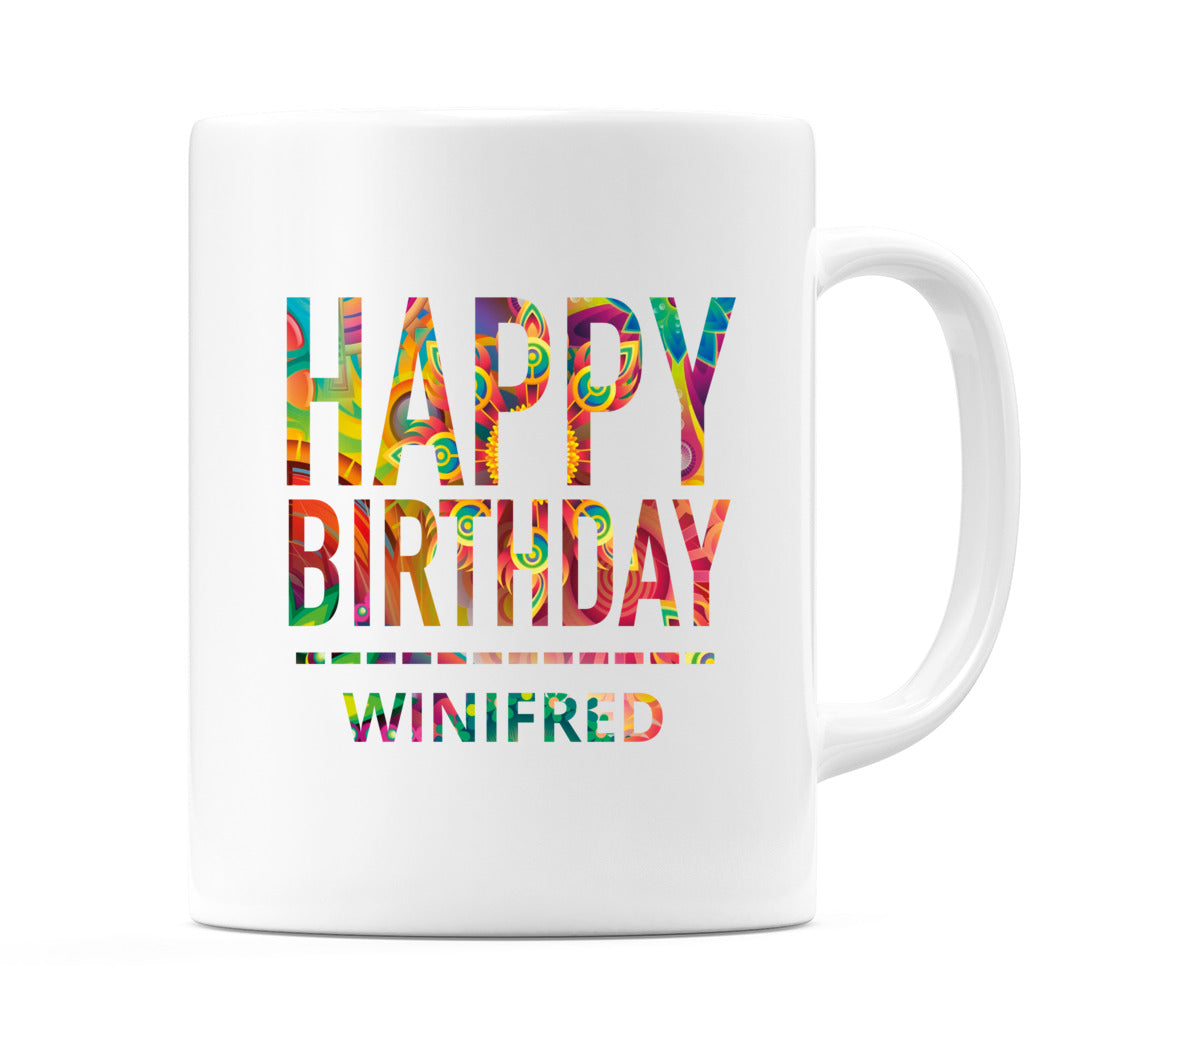 Happy Birthday Winifred (Tie Dye Effect) Mug Cup by WeDoMugs